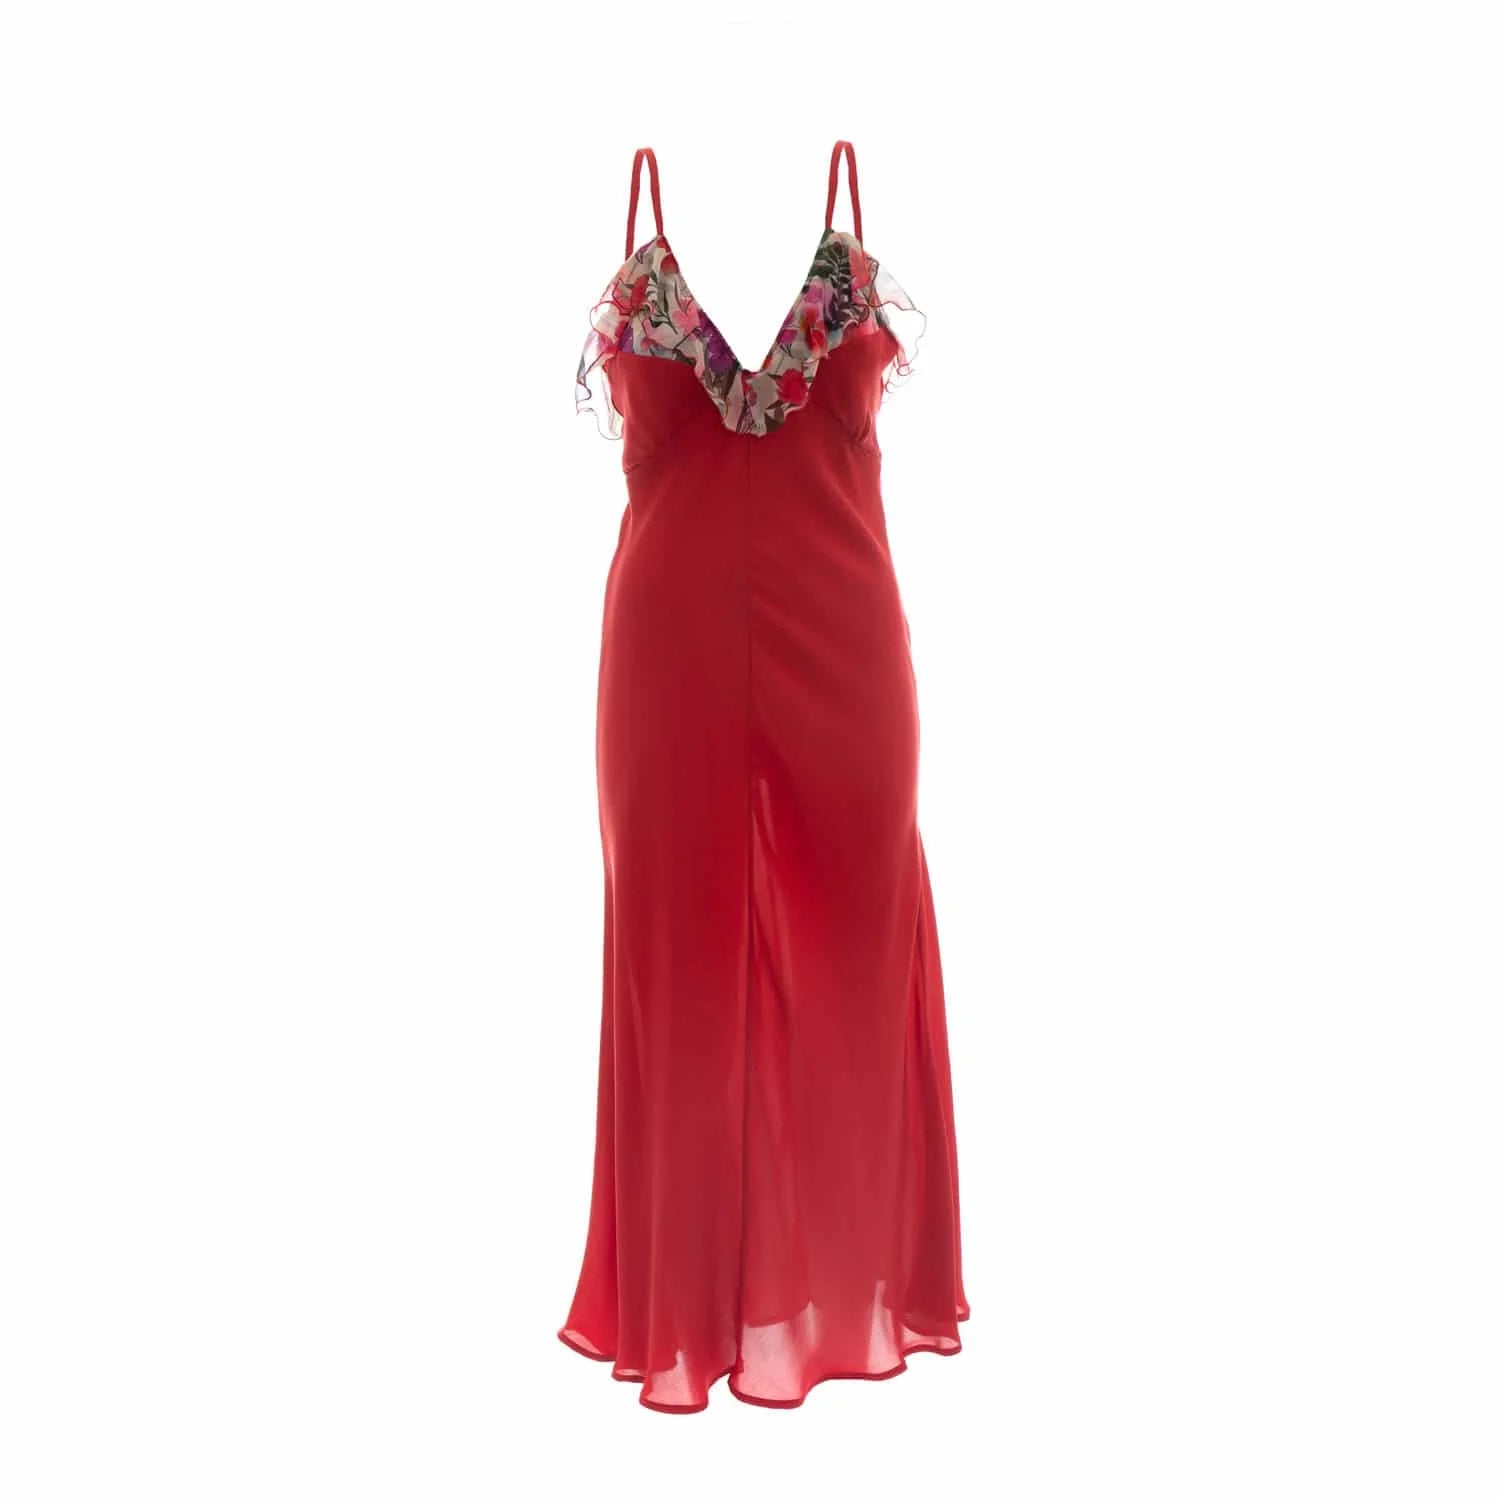 Red night dress - Lingerie